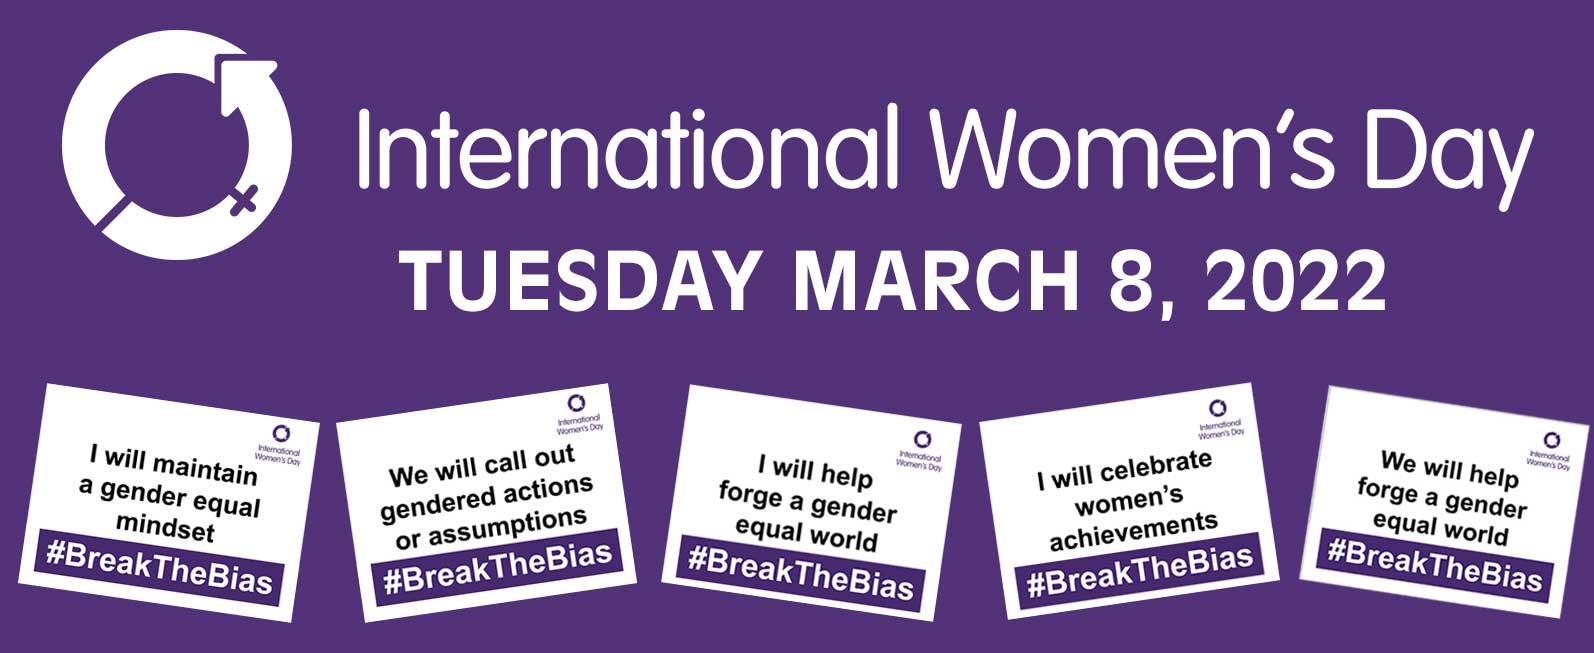 International Women’s Day #BreakTheBias